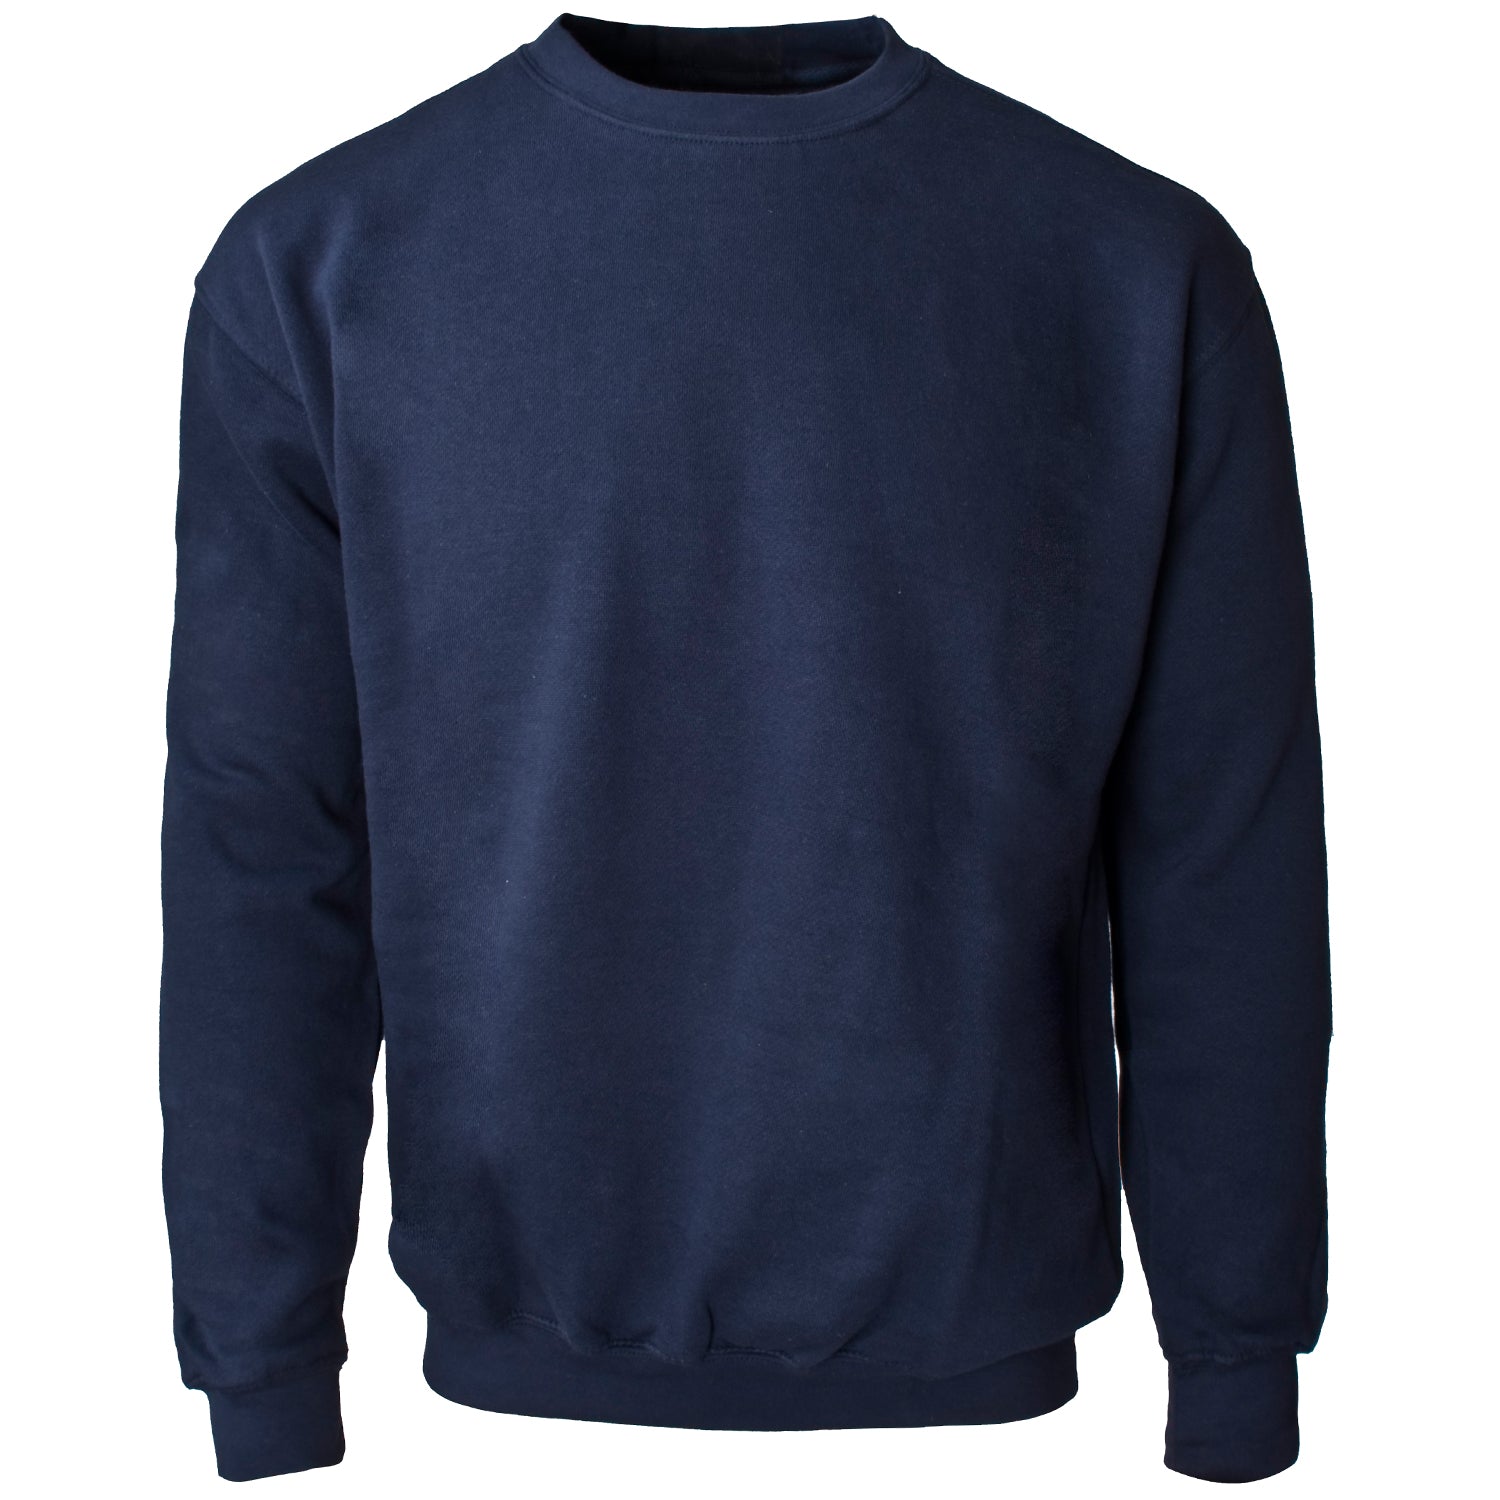 Supertouch Sweatshirt - Navy